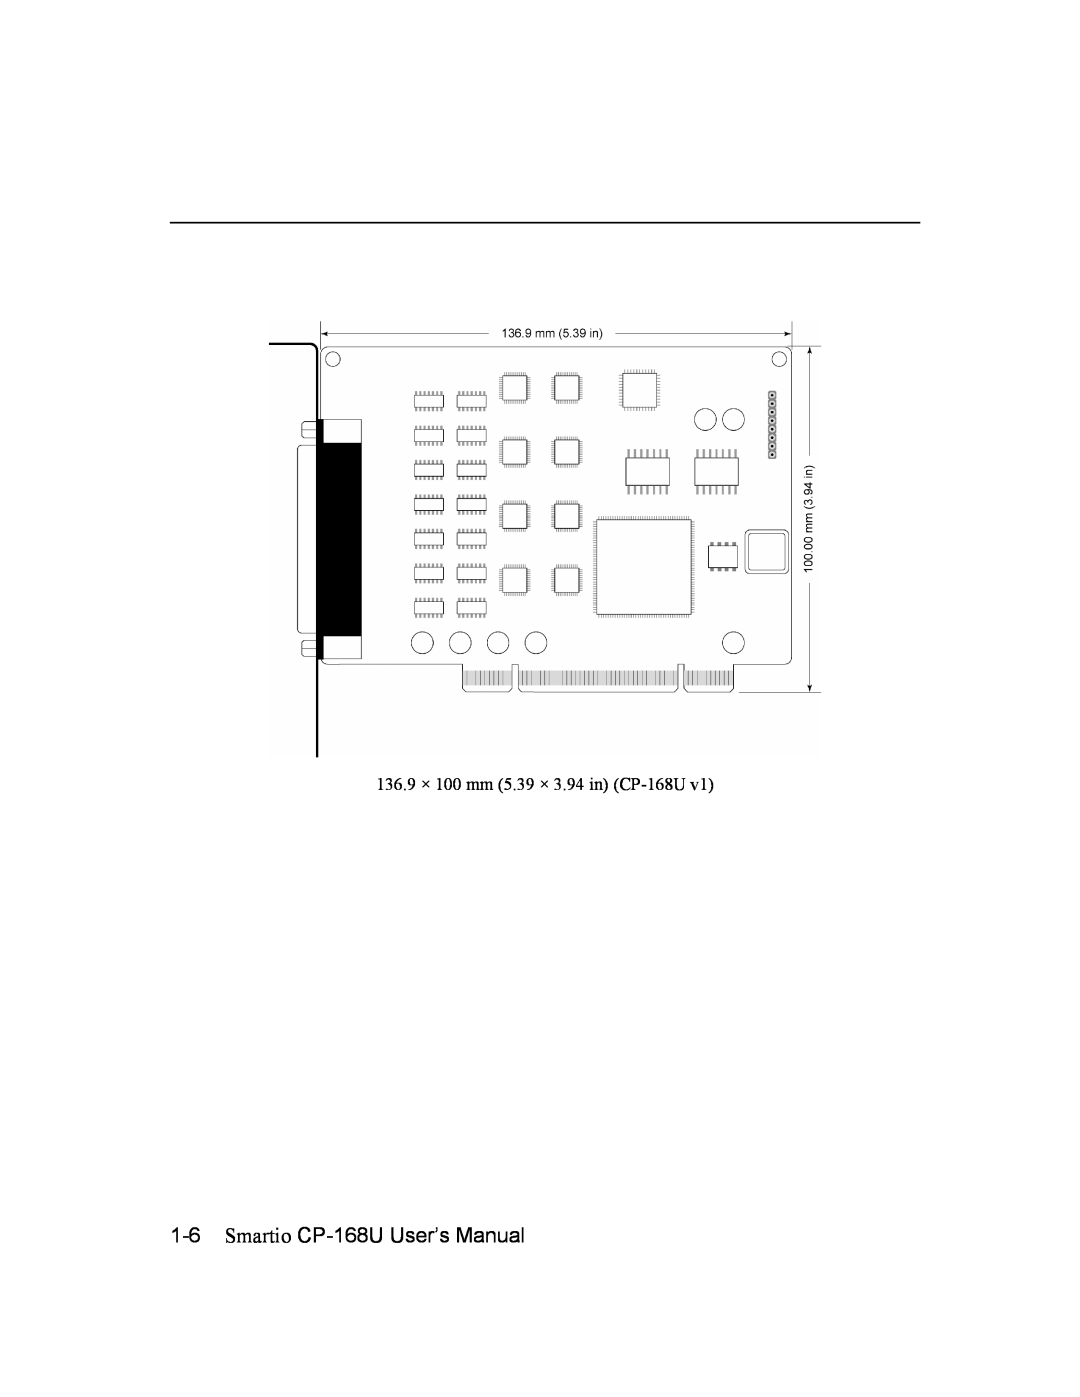 Moxa Technologies user manual Smartio CP-168U User’s Manual, 136.9 × 100 mm 5.39 × 3.94 in CP-168U 